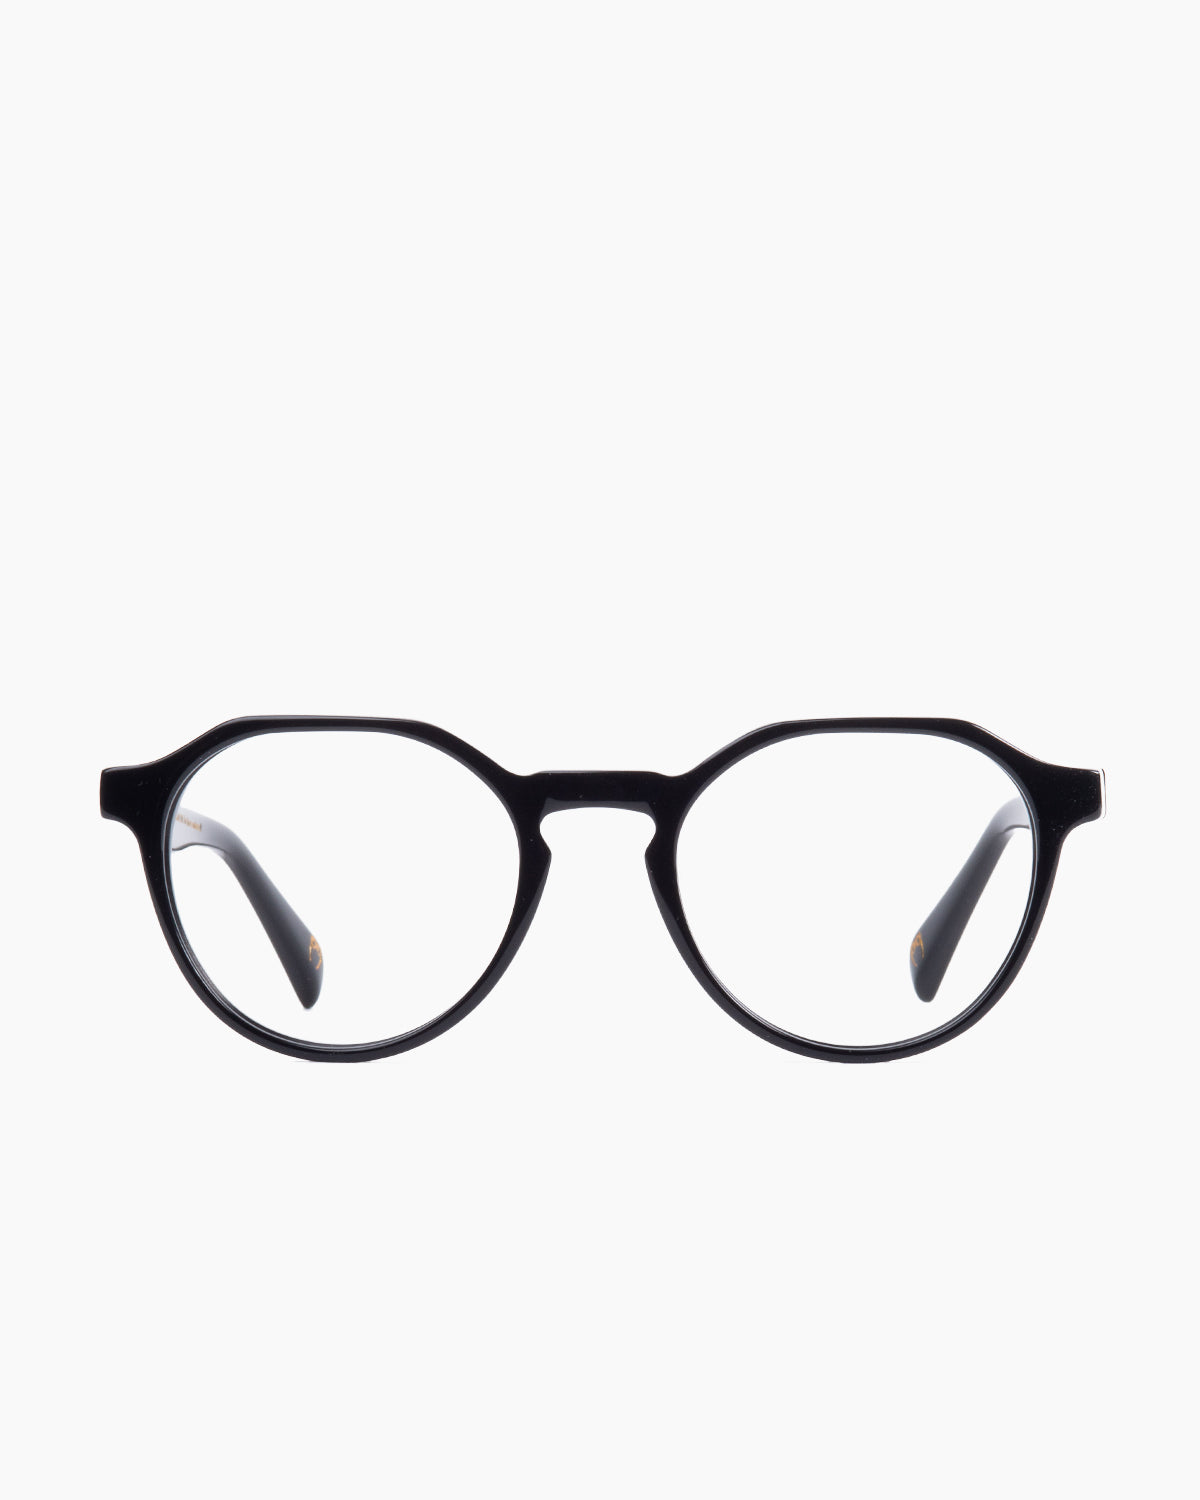 Spectacleeyeworks - Amir - 306 | Bar à lunettes